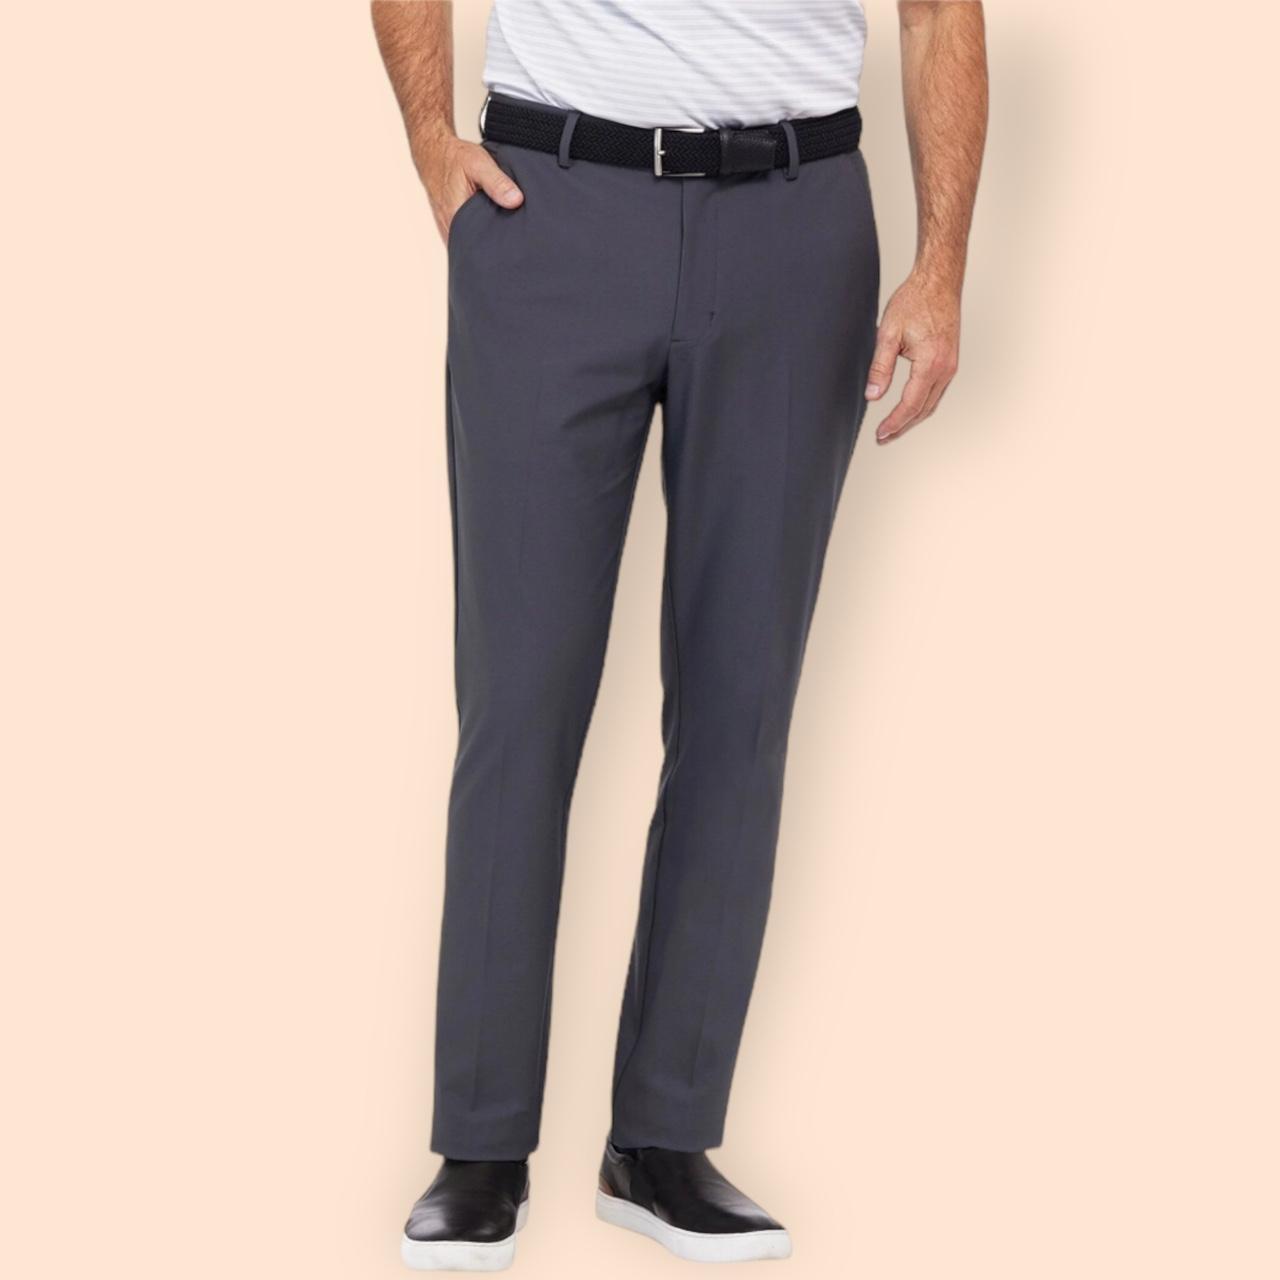 Brand: Greg Norman. Men's golf, active wear - Depop